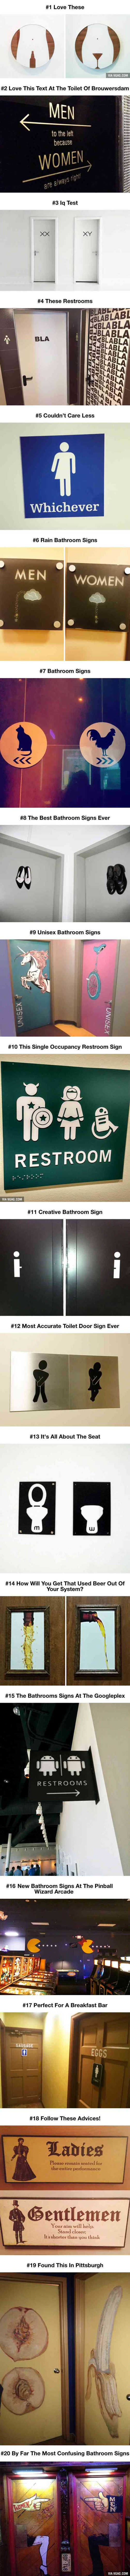 Funny-Restroom-Signs-0